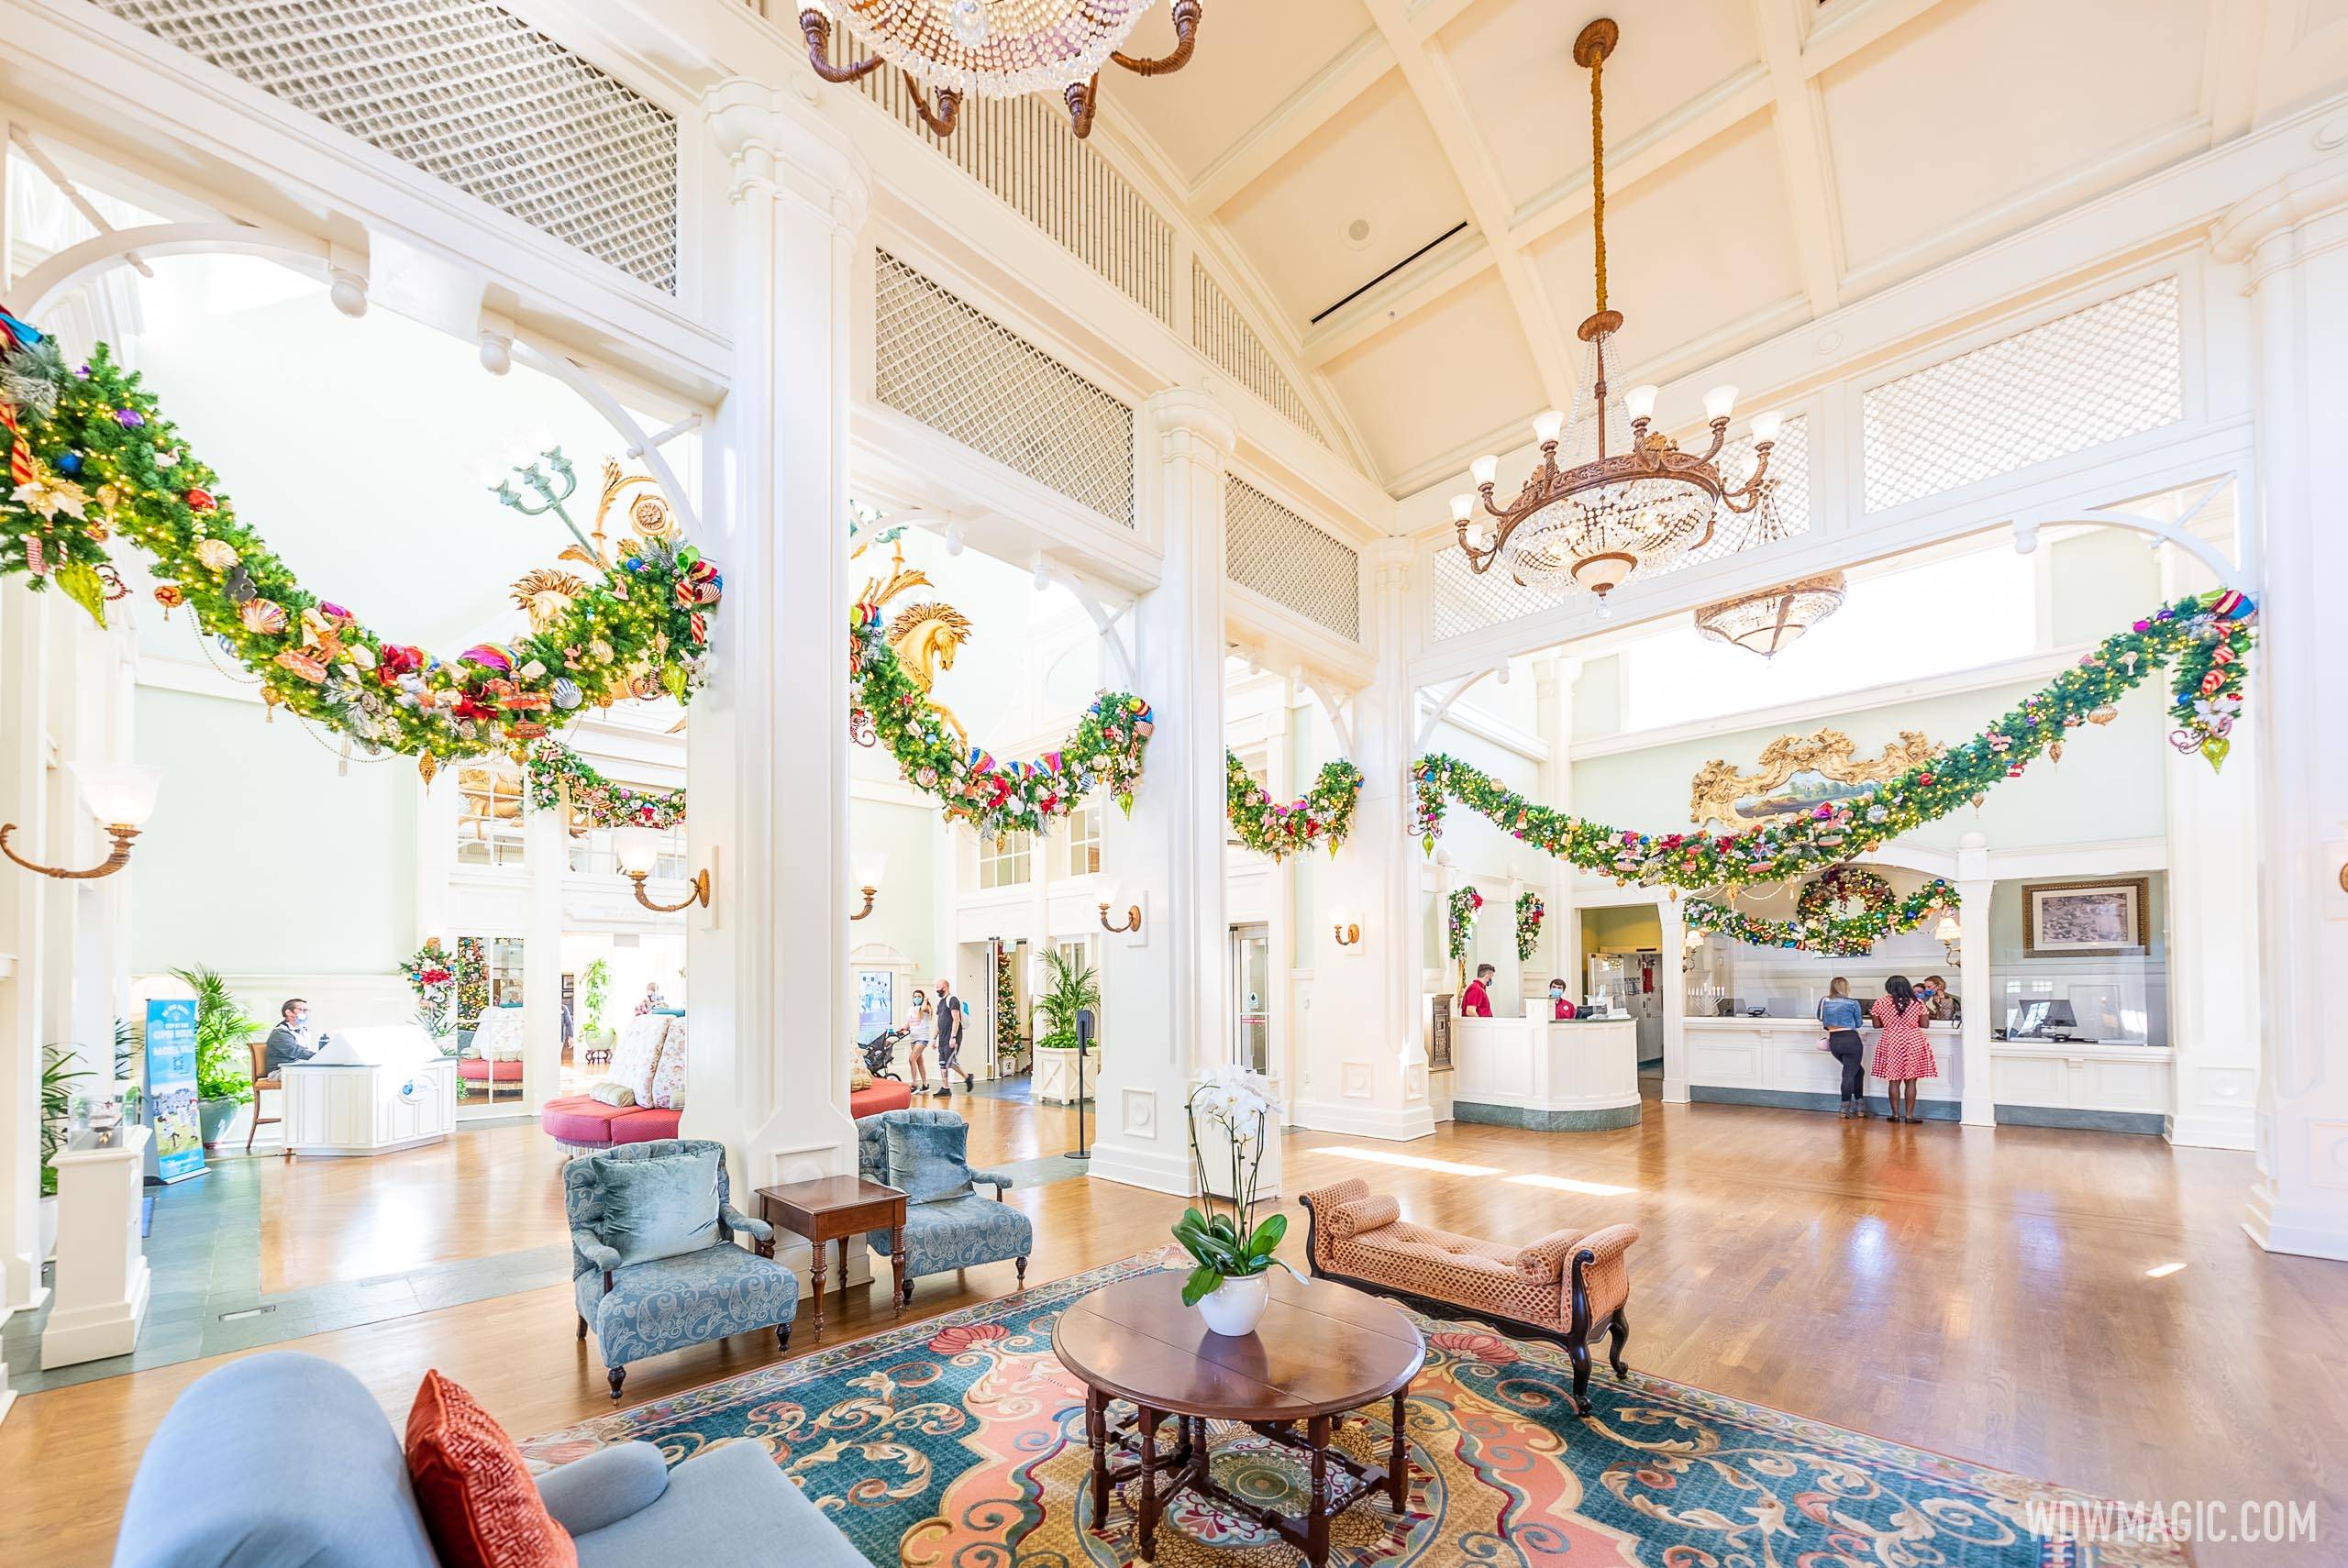 Disney's BoardWalk Inn holiday decorations 2021